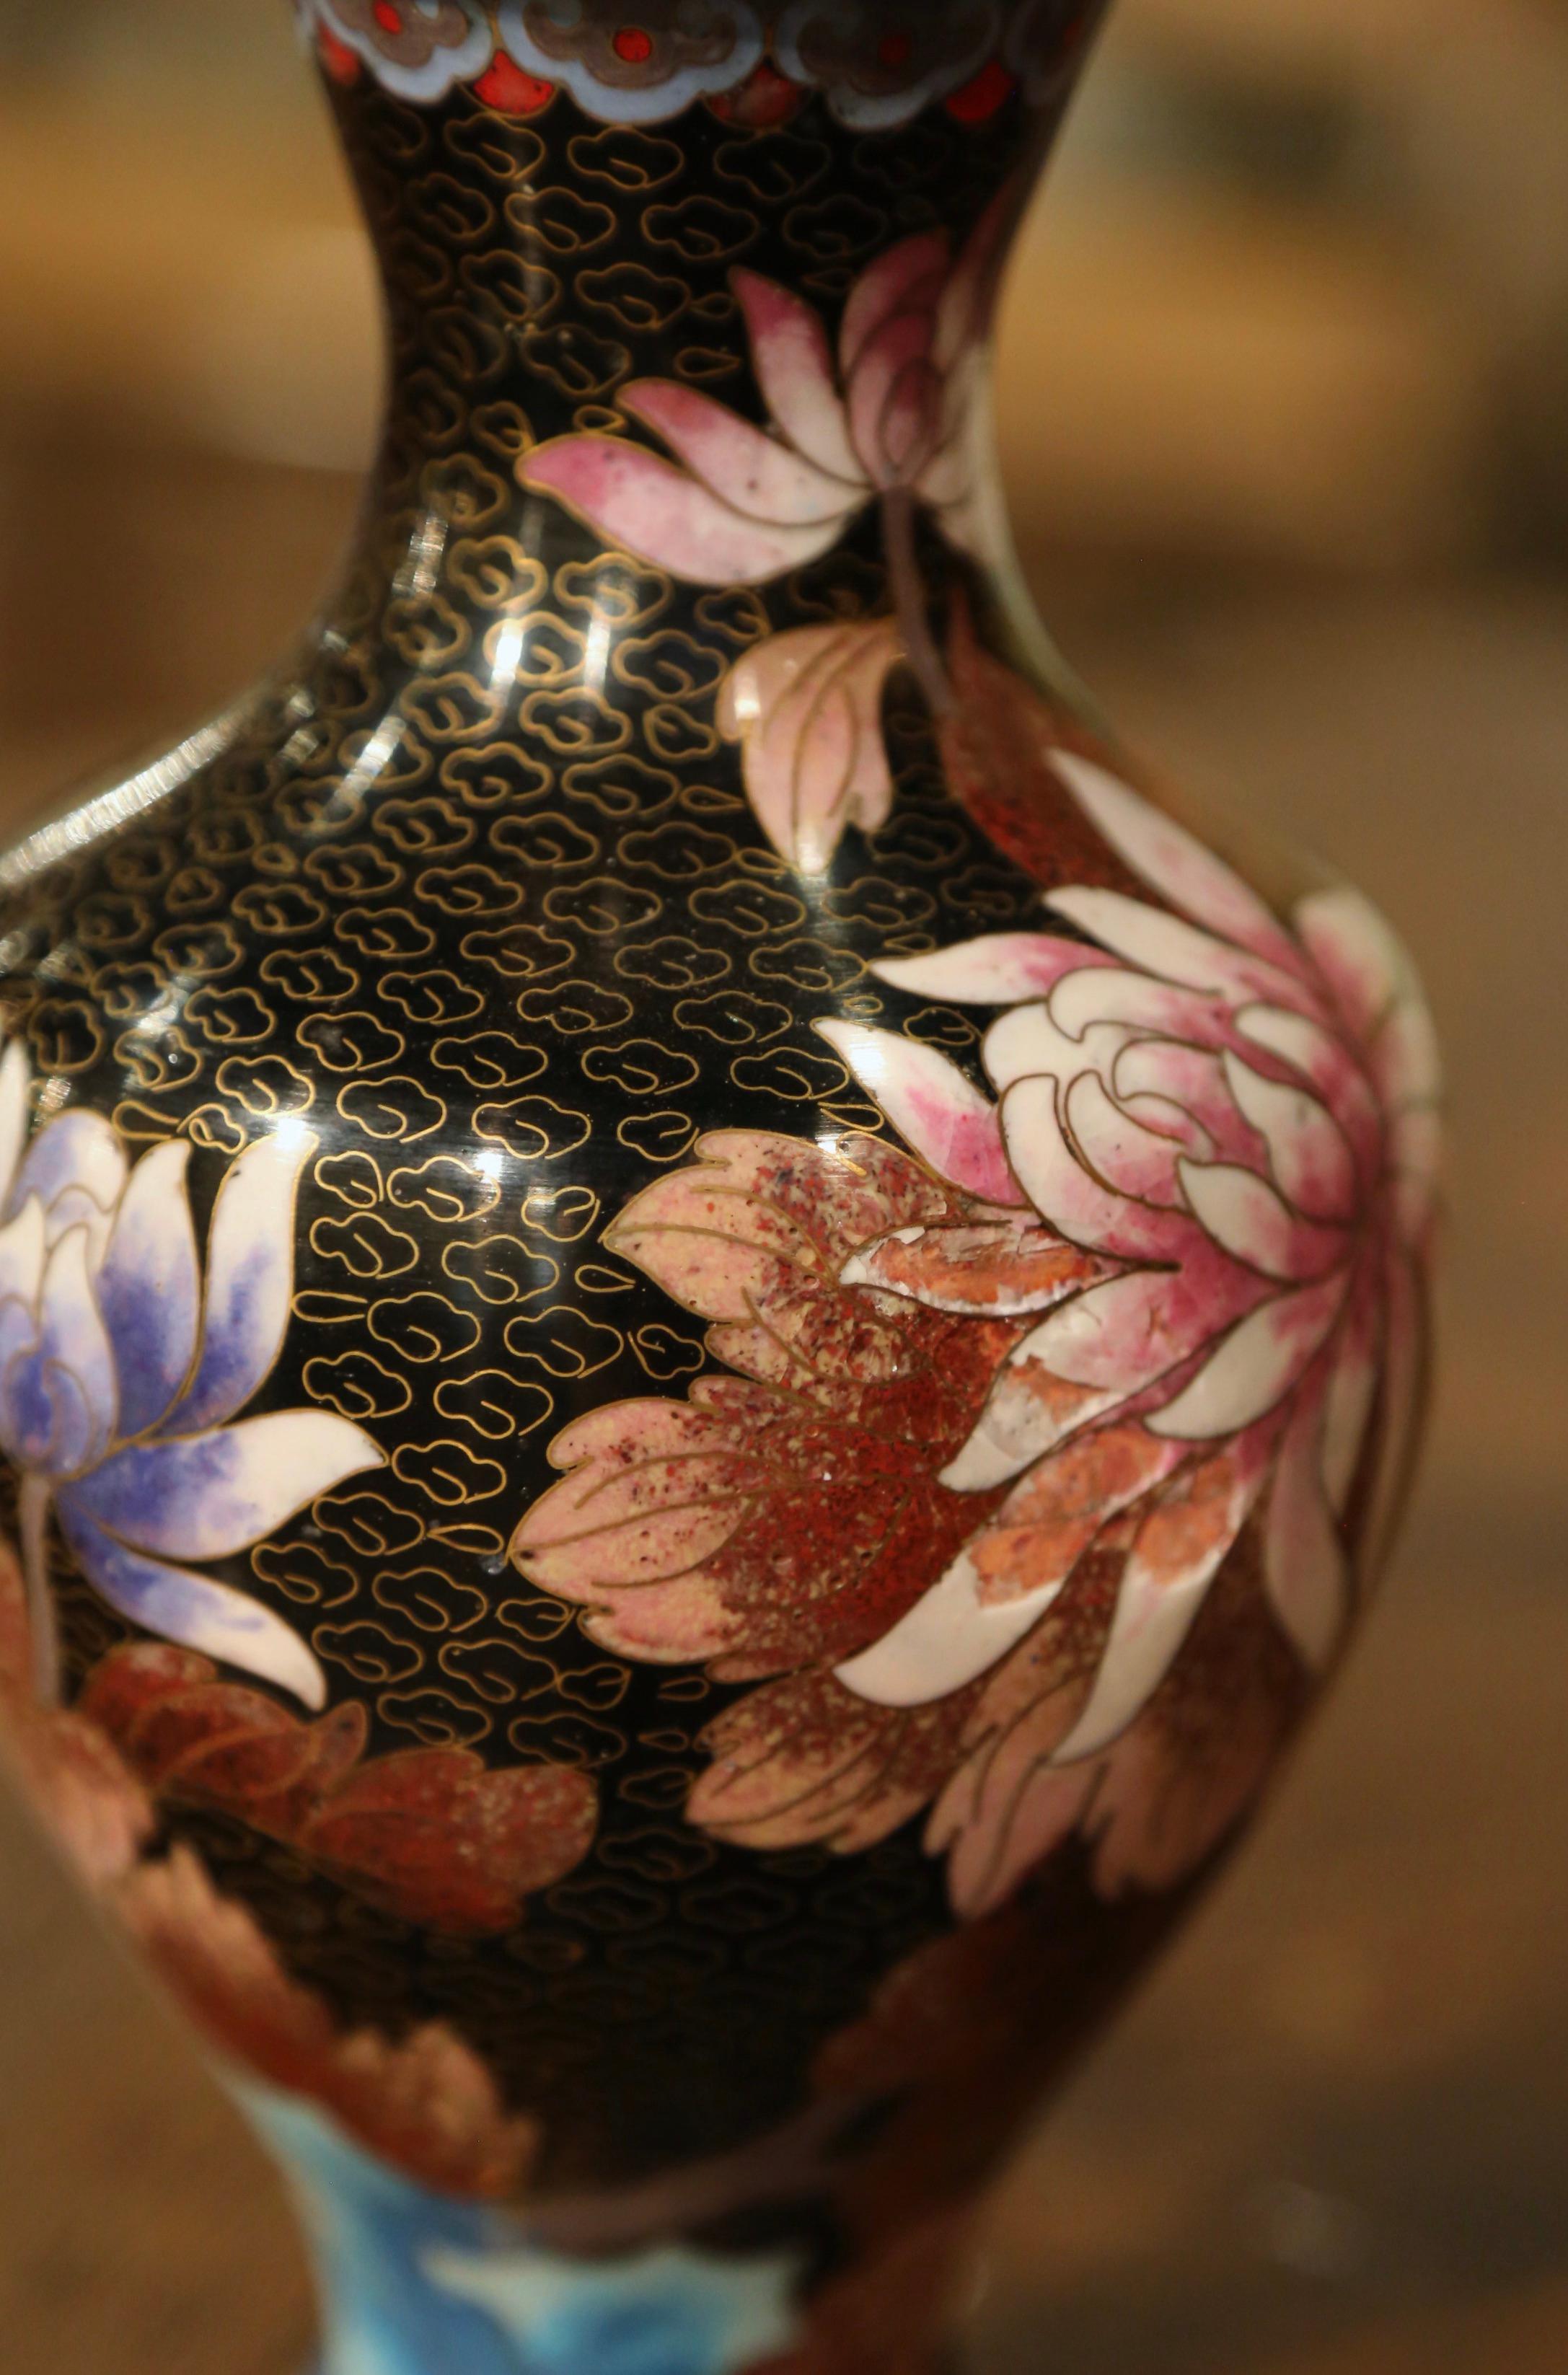  Vintage Chinese Cloisonne Enamel Vase with Floral and Leaf Motifs  For Sale 1